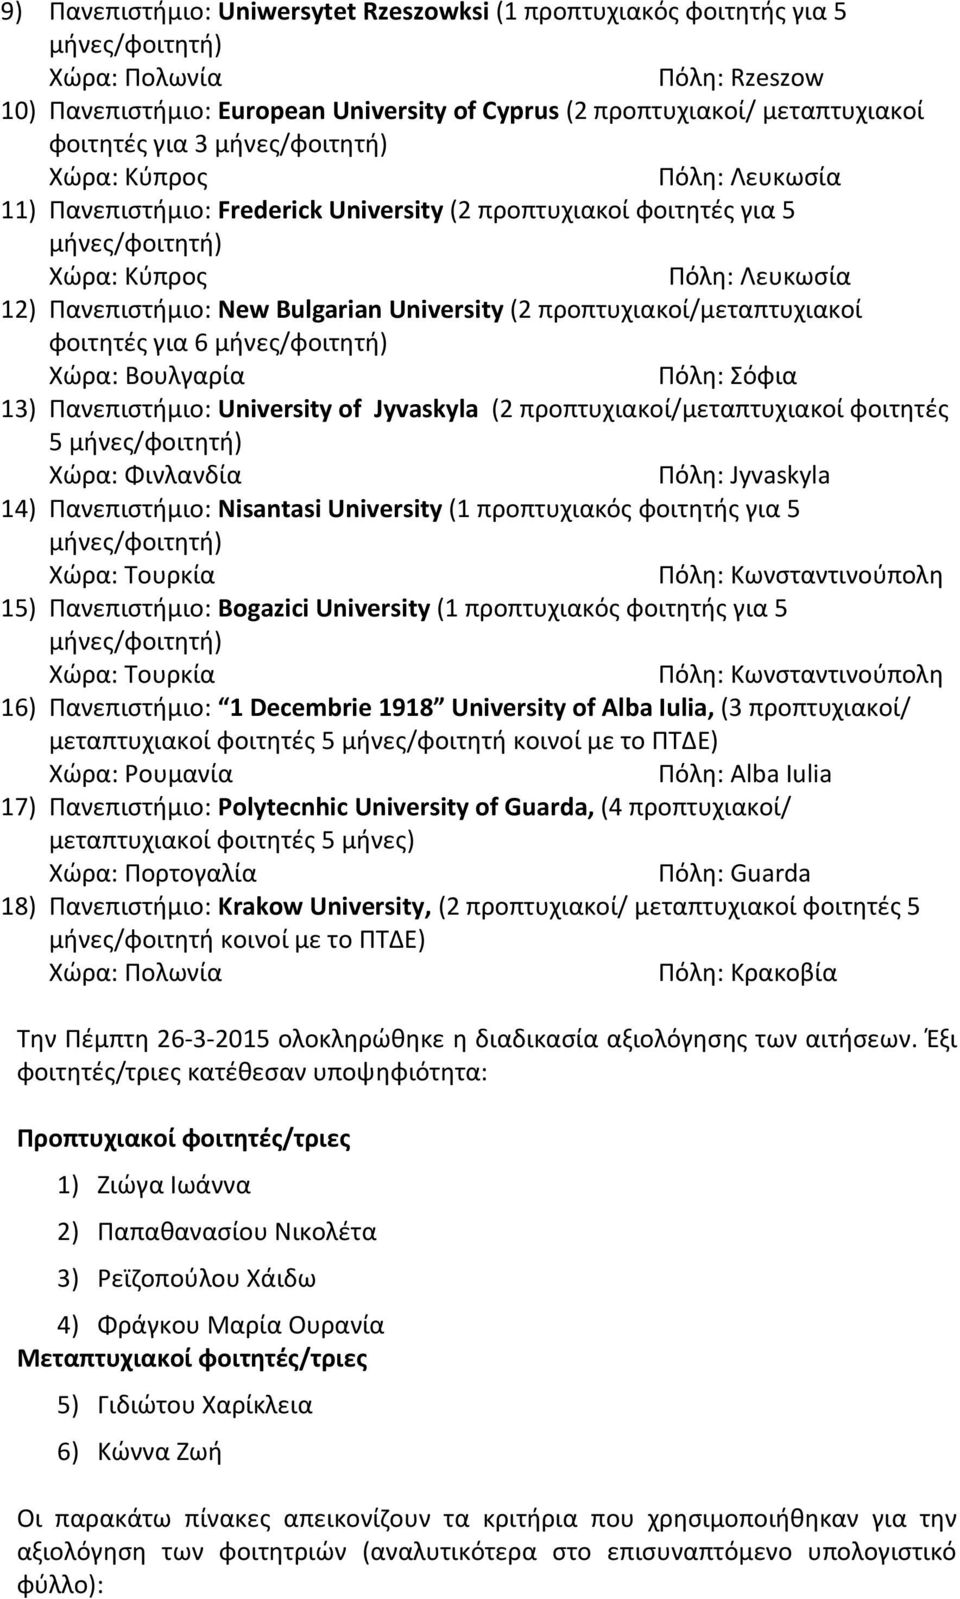 University of Jyvaskyla (2 προπτυχιακοί/μεταπτυχιακοί φοιτητές 5 Χώρα: Φινλανδία Πόλη: Jyvaskyla 14) Πανεπιστήμιο: Nisantasi University (1 προπτυχιακός φοιτητής για 5 Πόλη: Κωνσταντινούπολη 15)